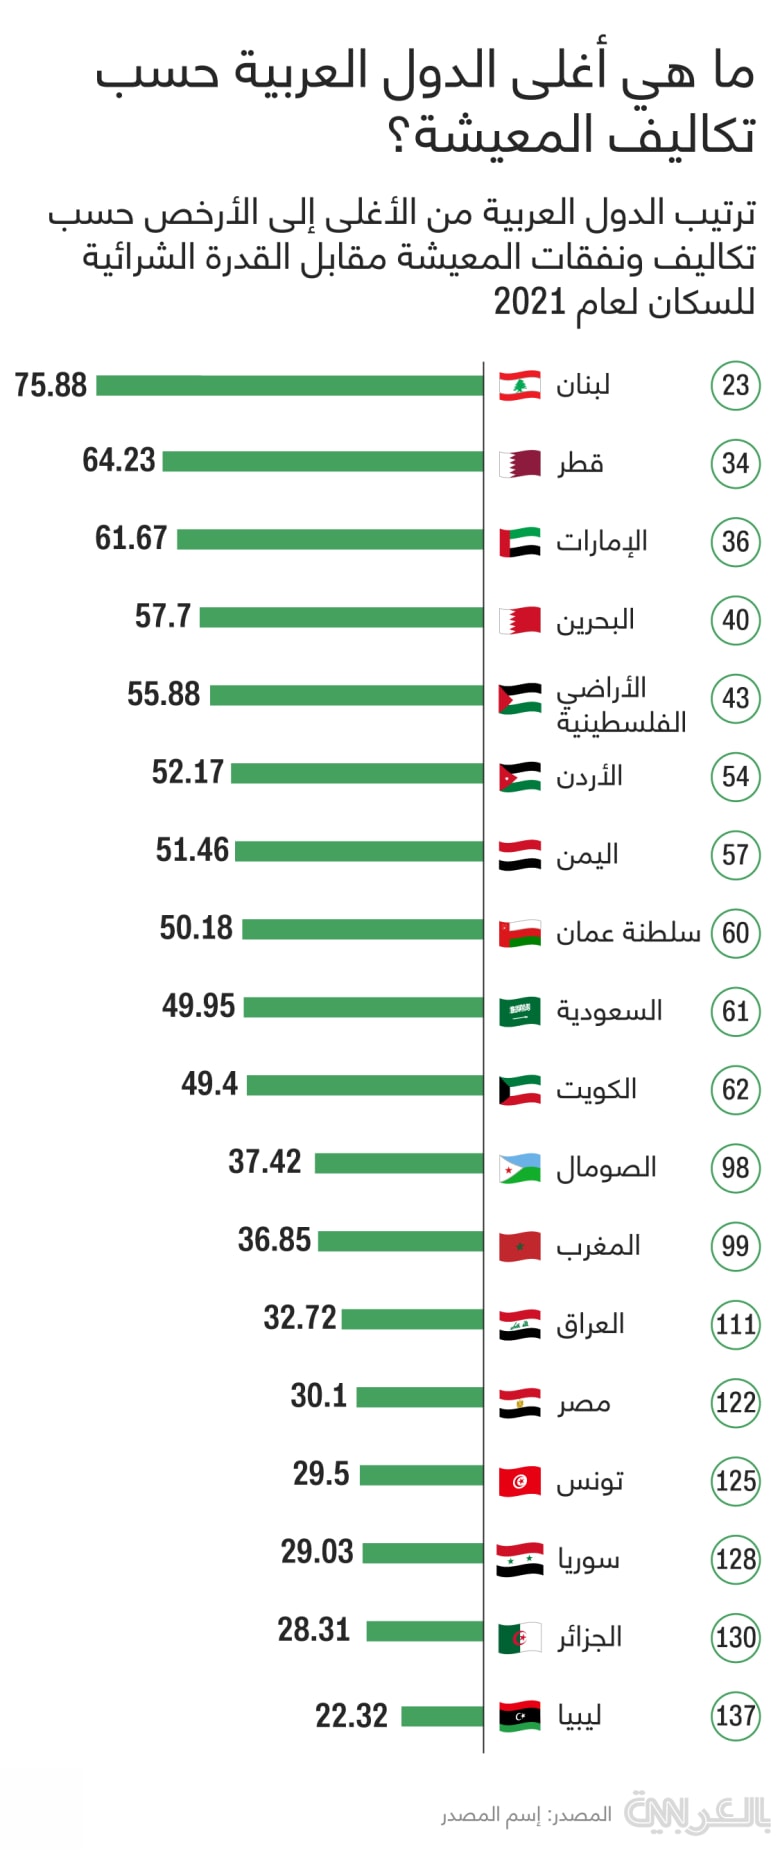 Arab-living-expenses-highest-lowest